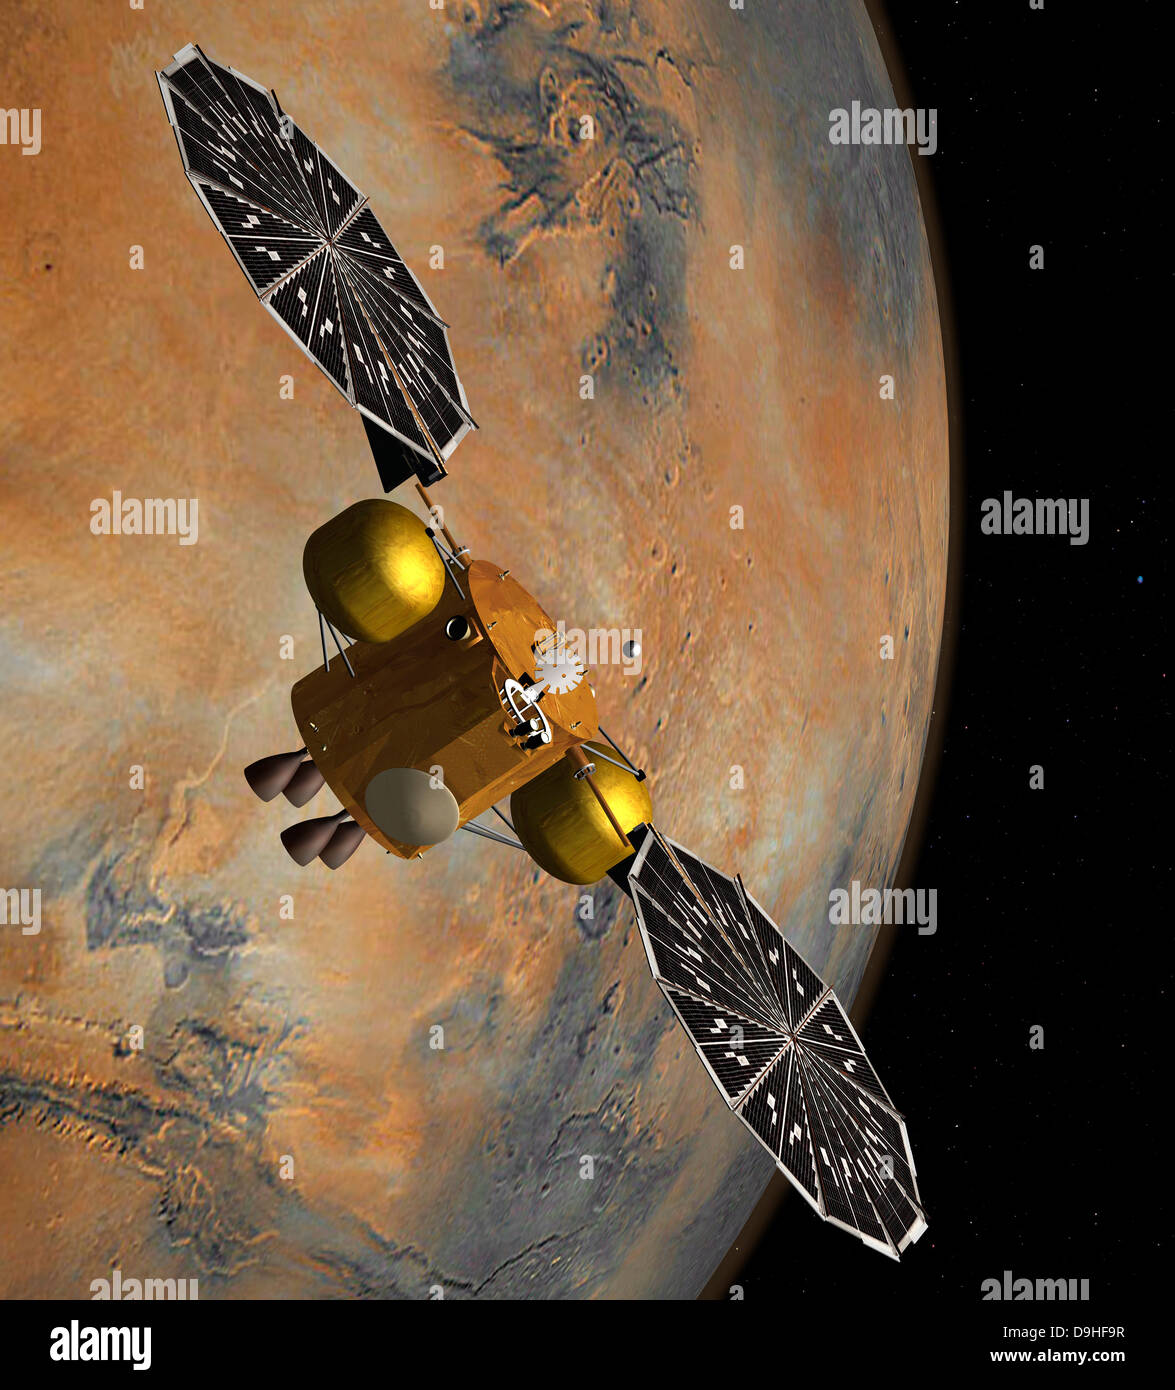 Artist's concept of a spacecraft orbiting Mars. Stock Photo